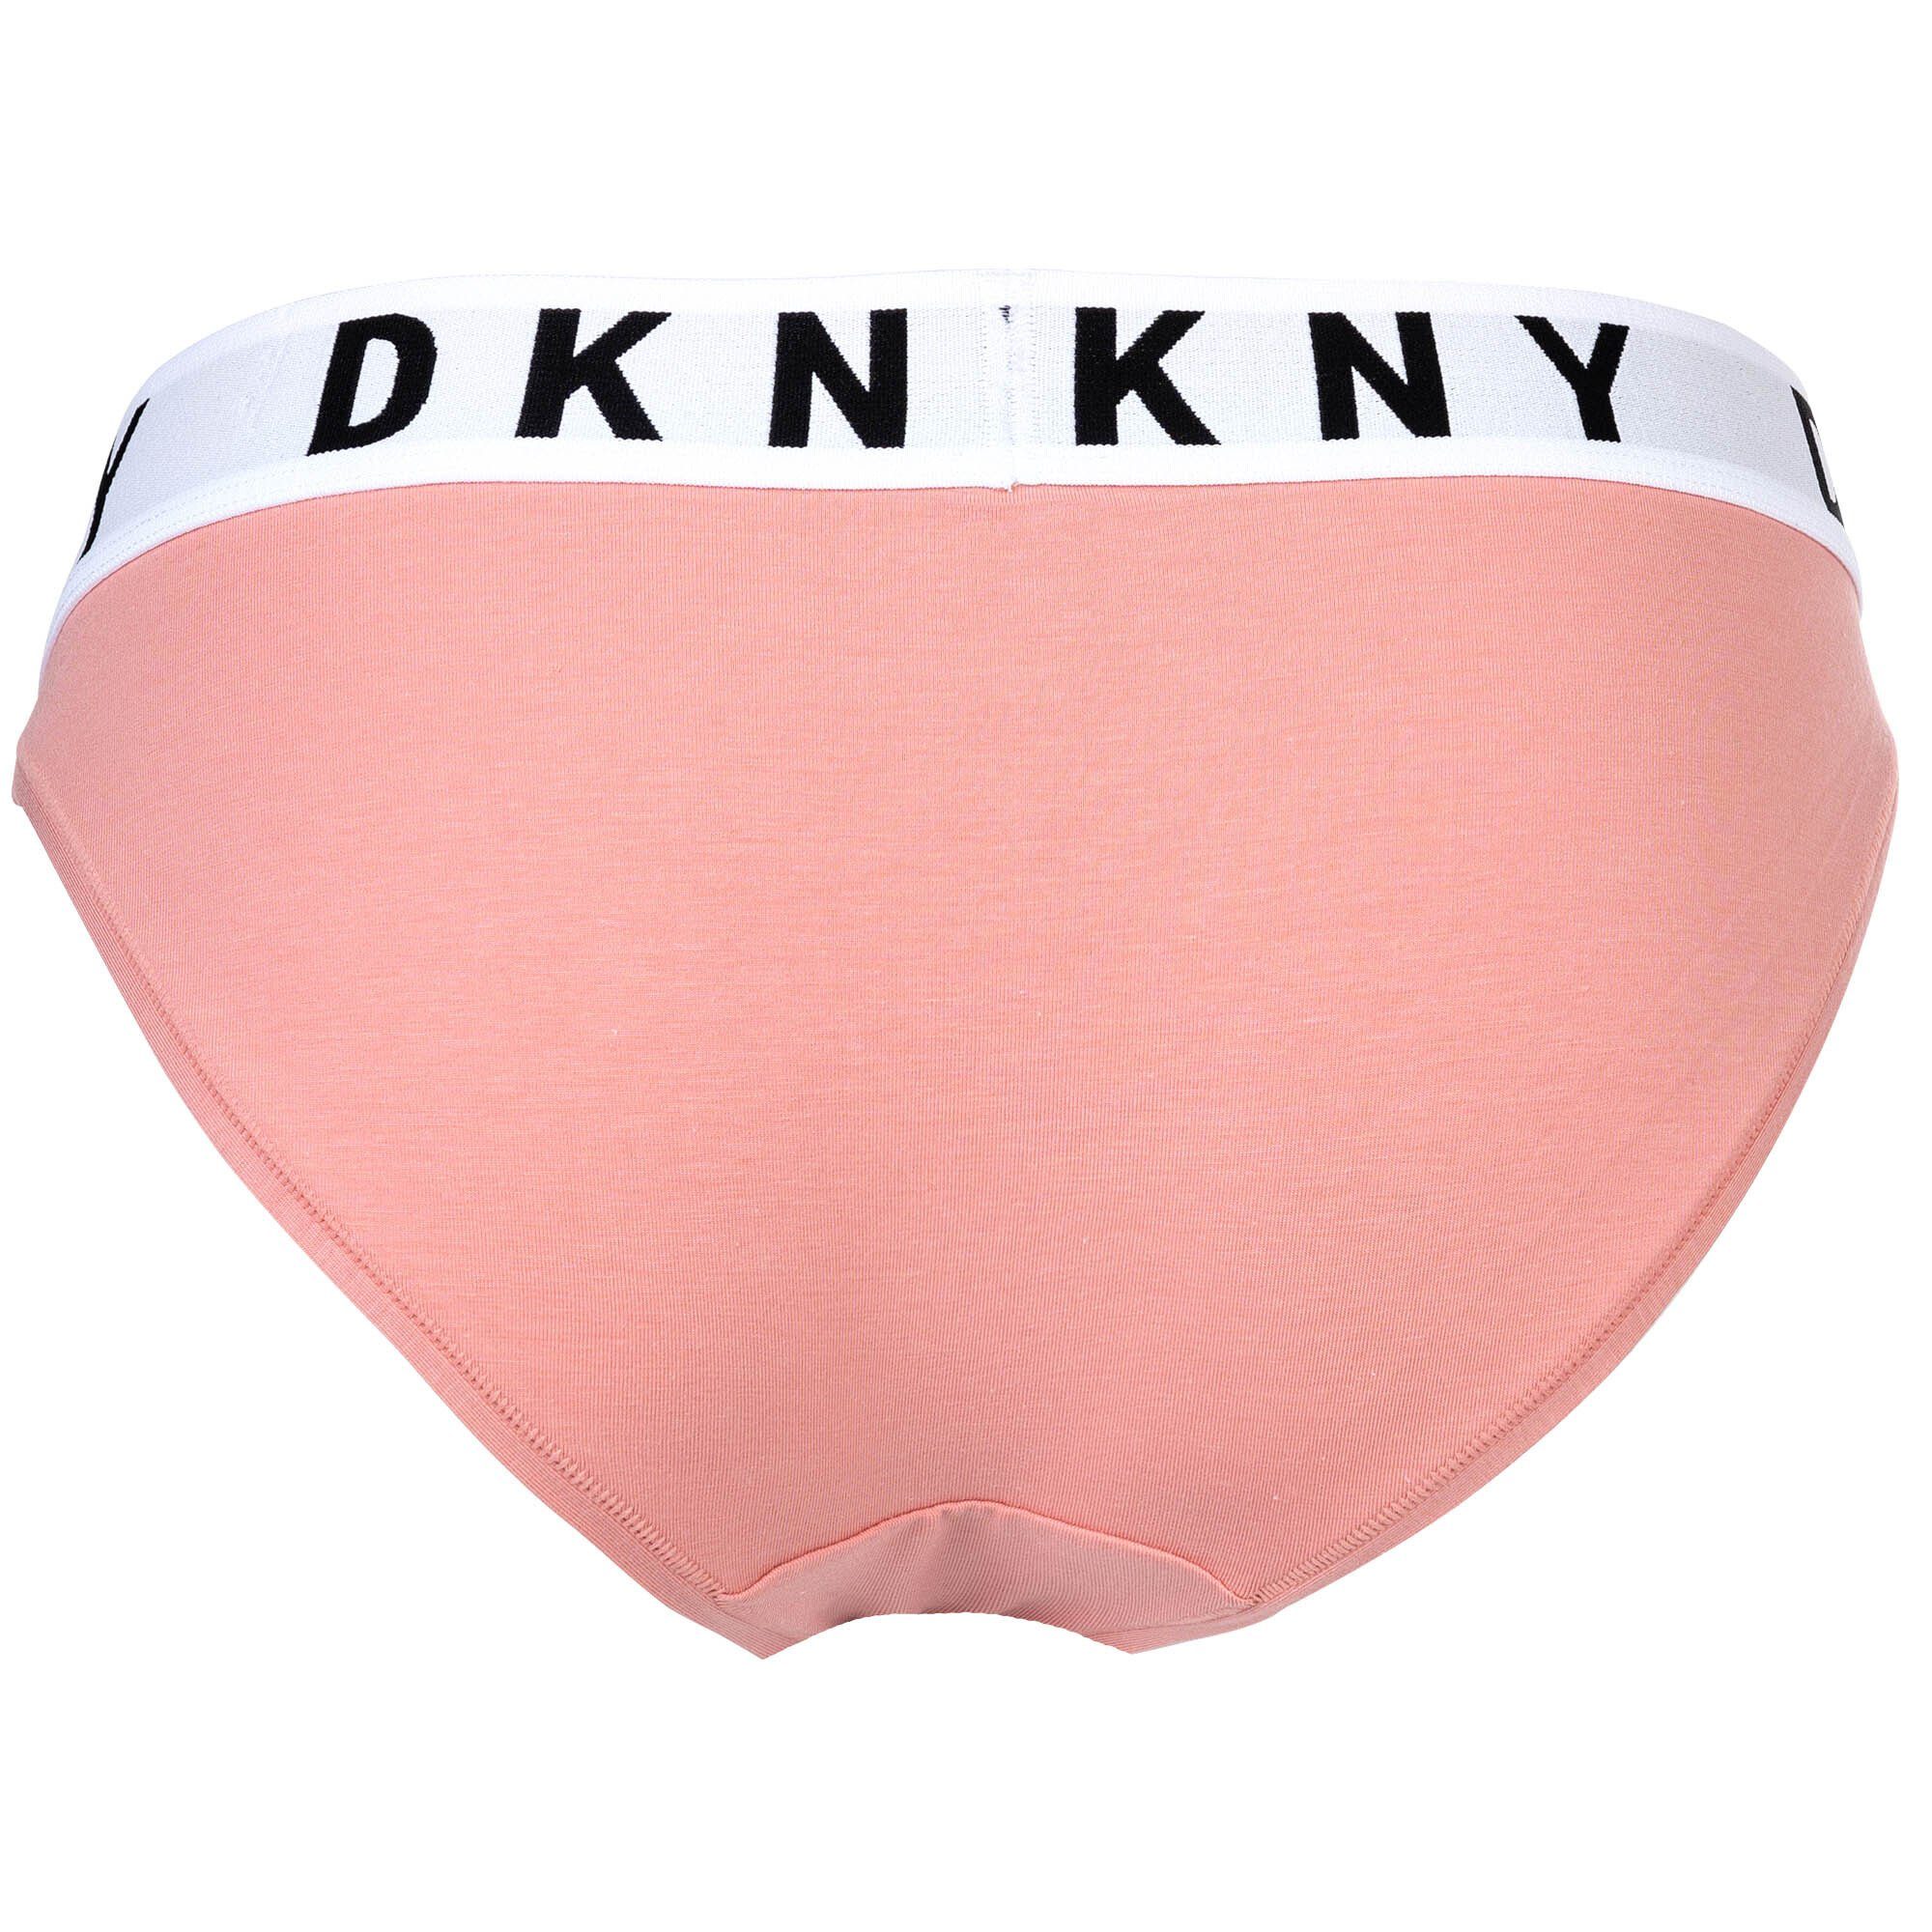 DKNY Panty Damen Altrosa Cotton Brief, Stretch Modal - Slip